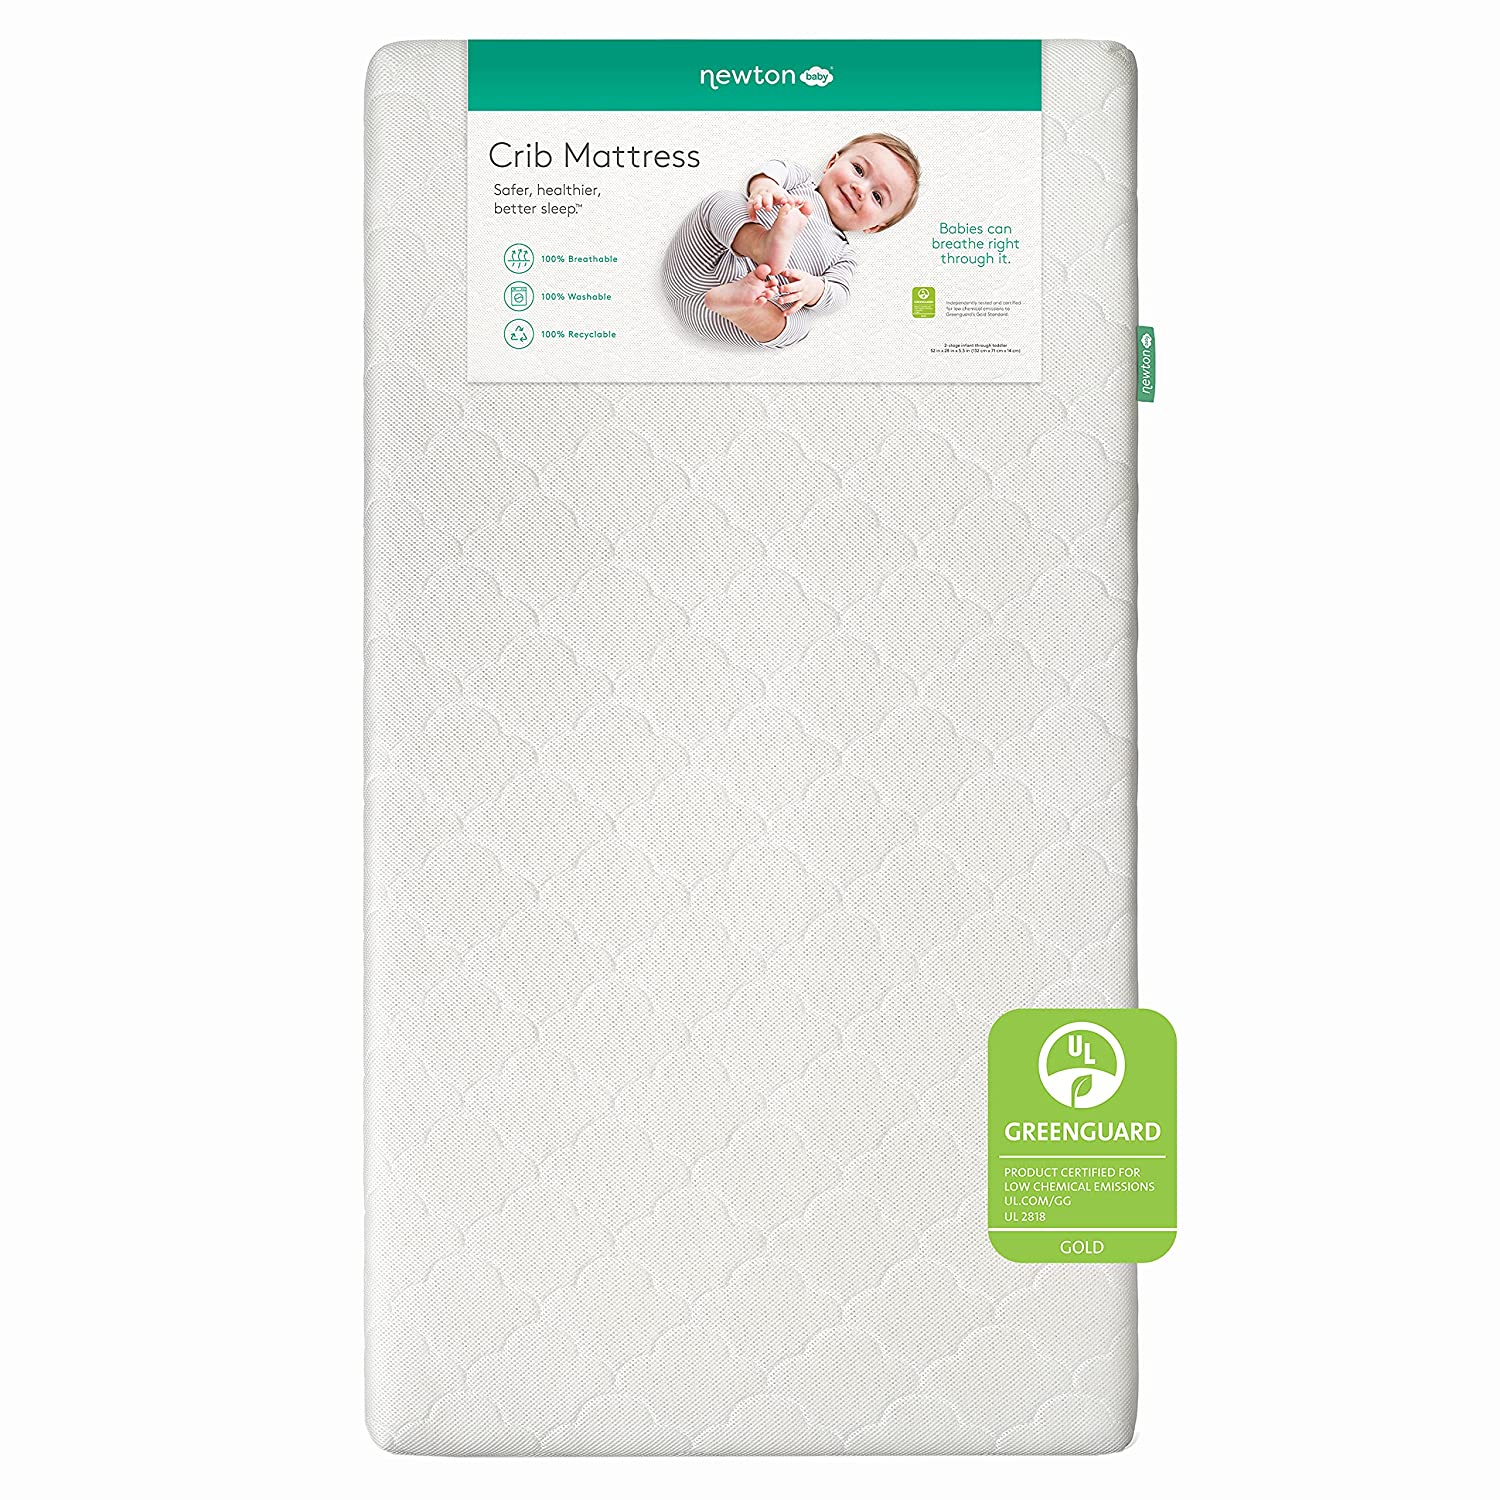 newton baby crib mattress, best breathable crib mattress